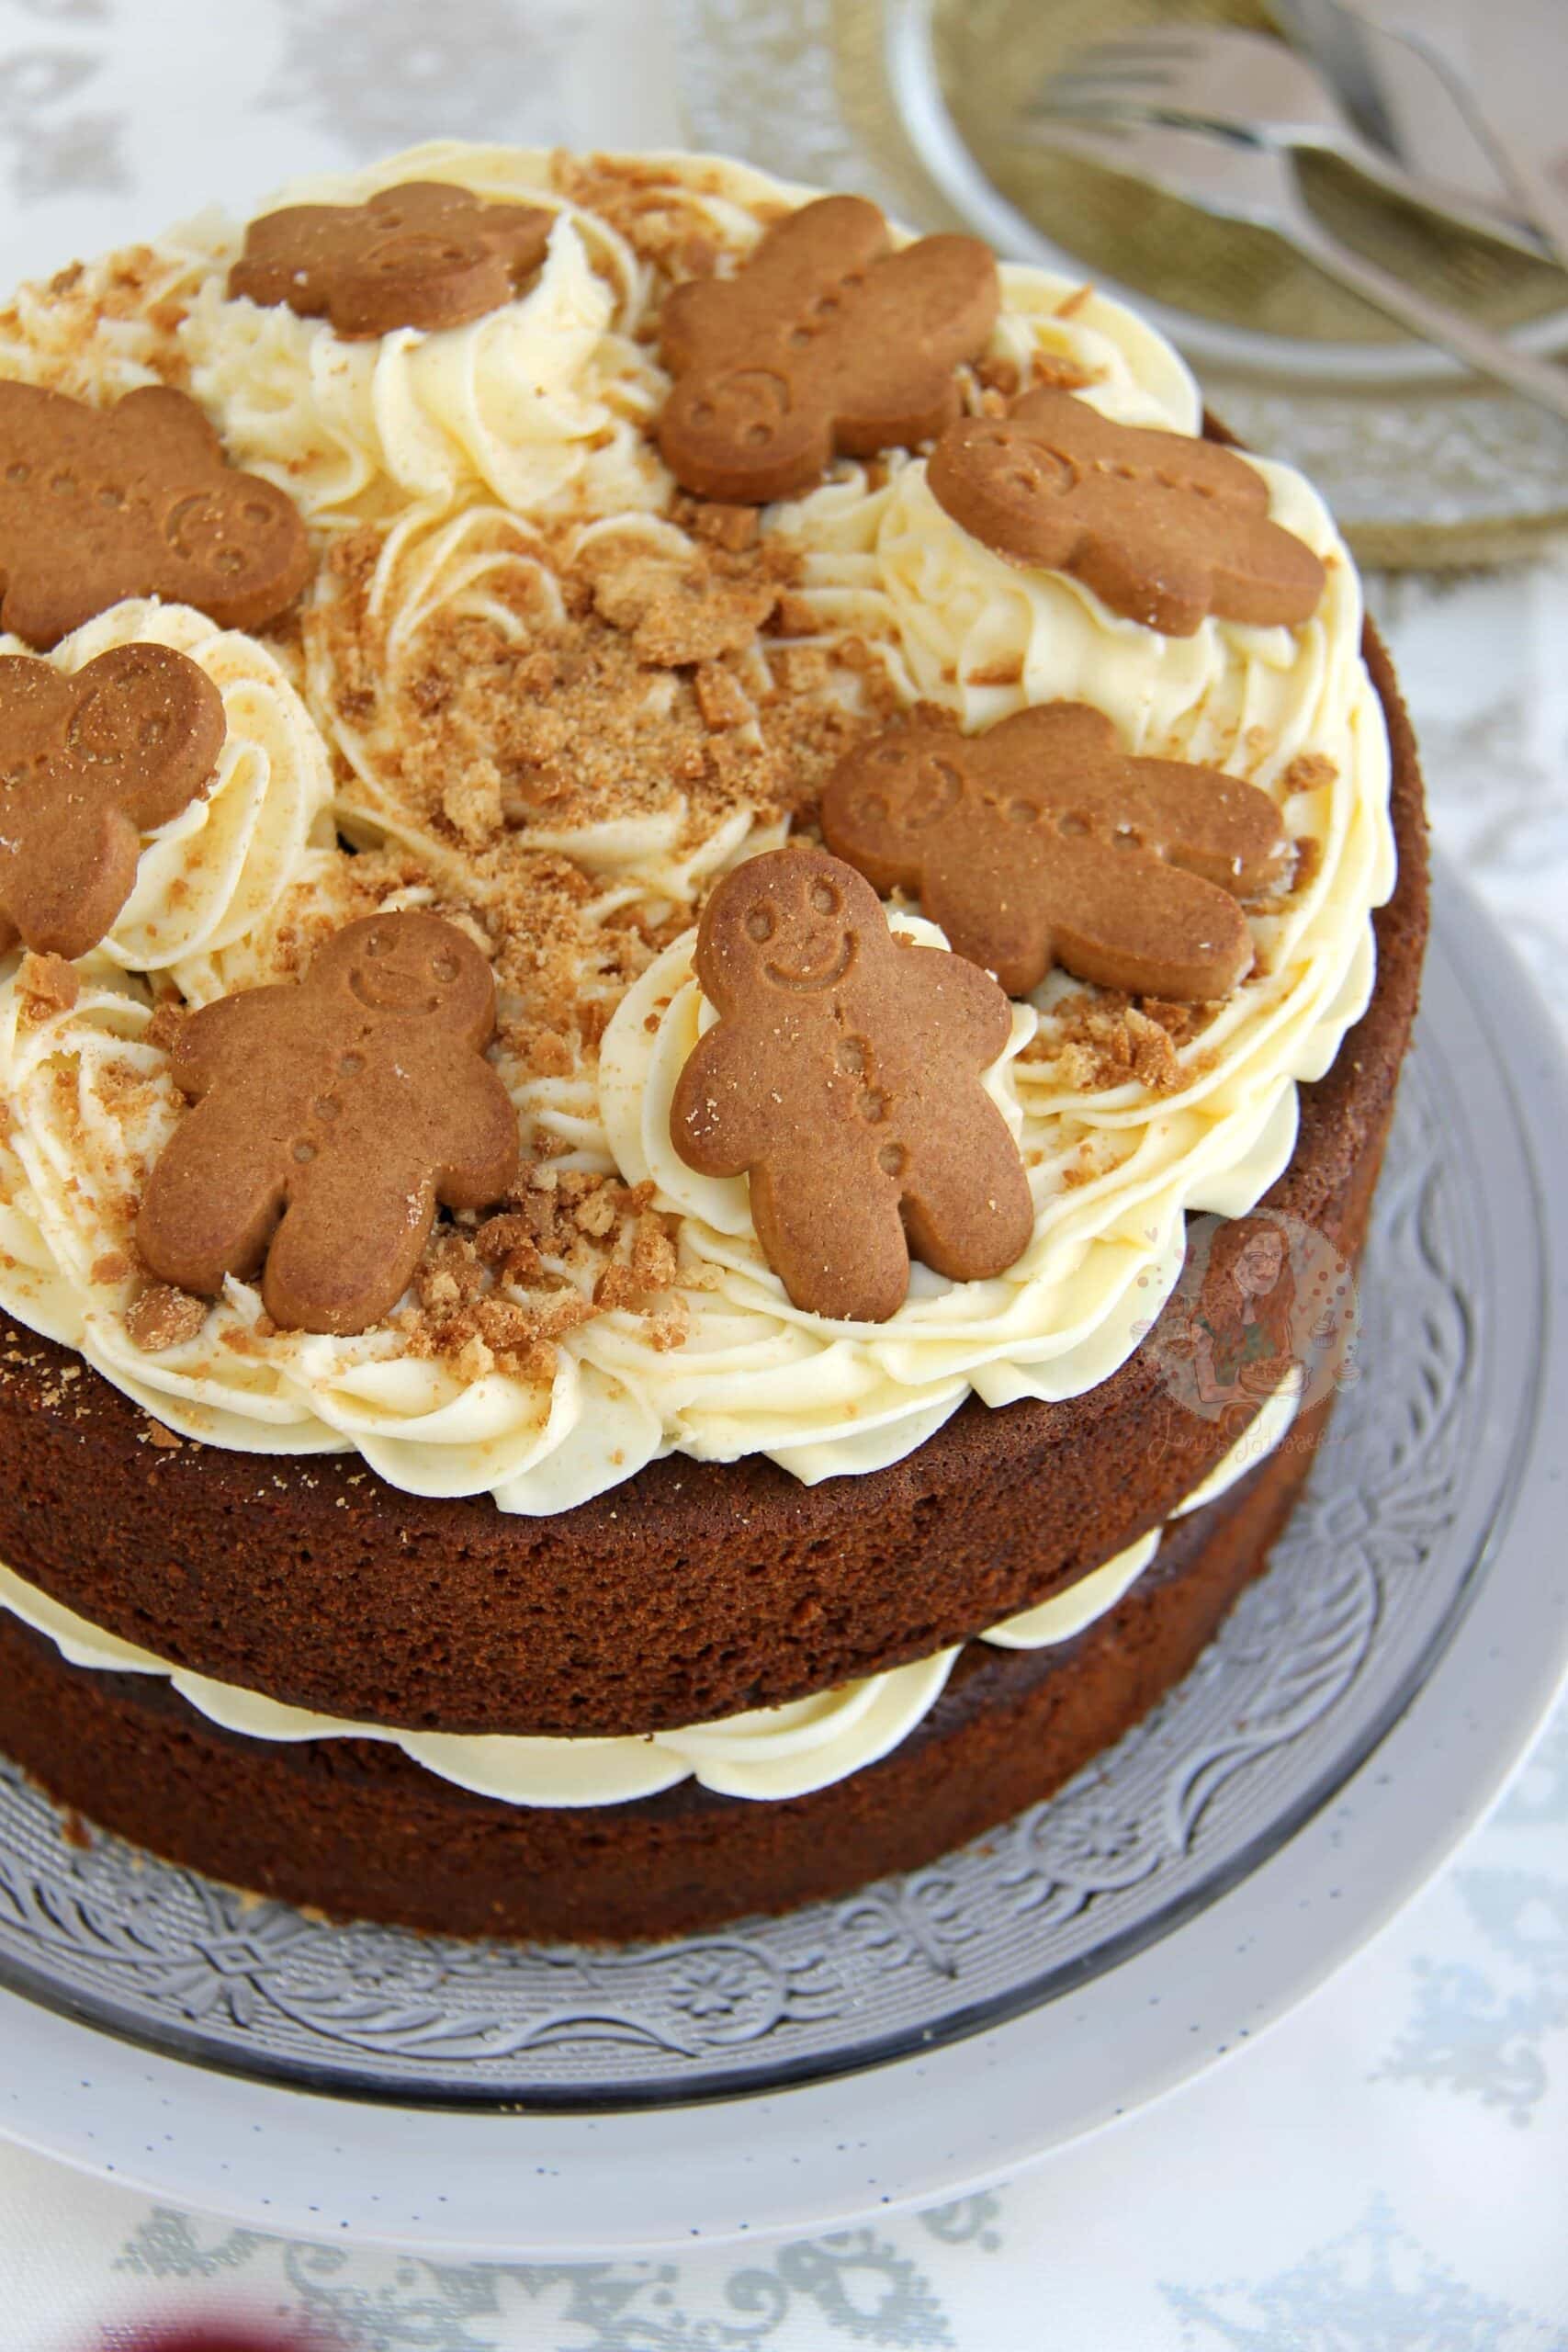 Jamaica Ginger Cake Recipe | Cake and Cookie Recipes